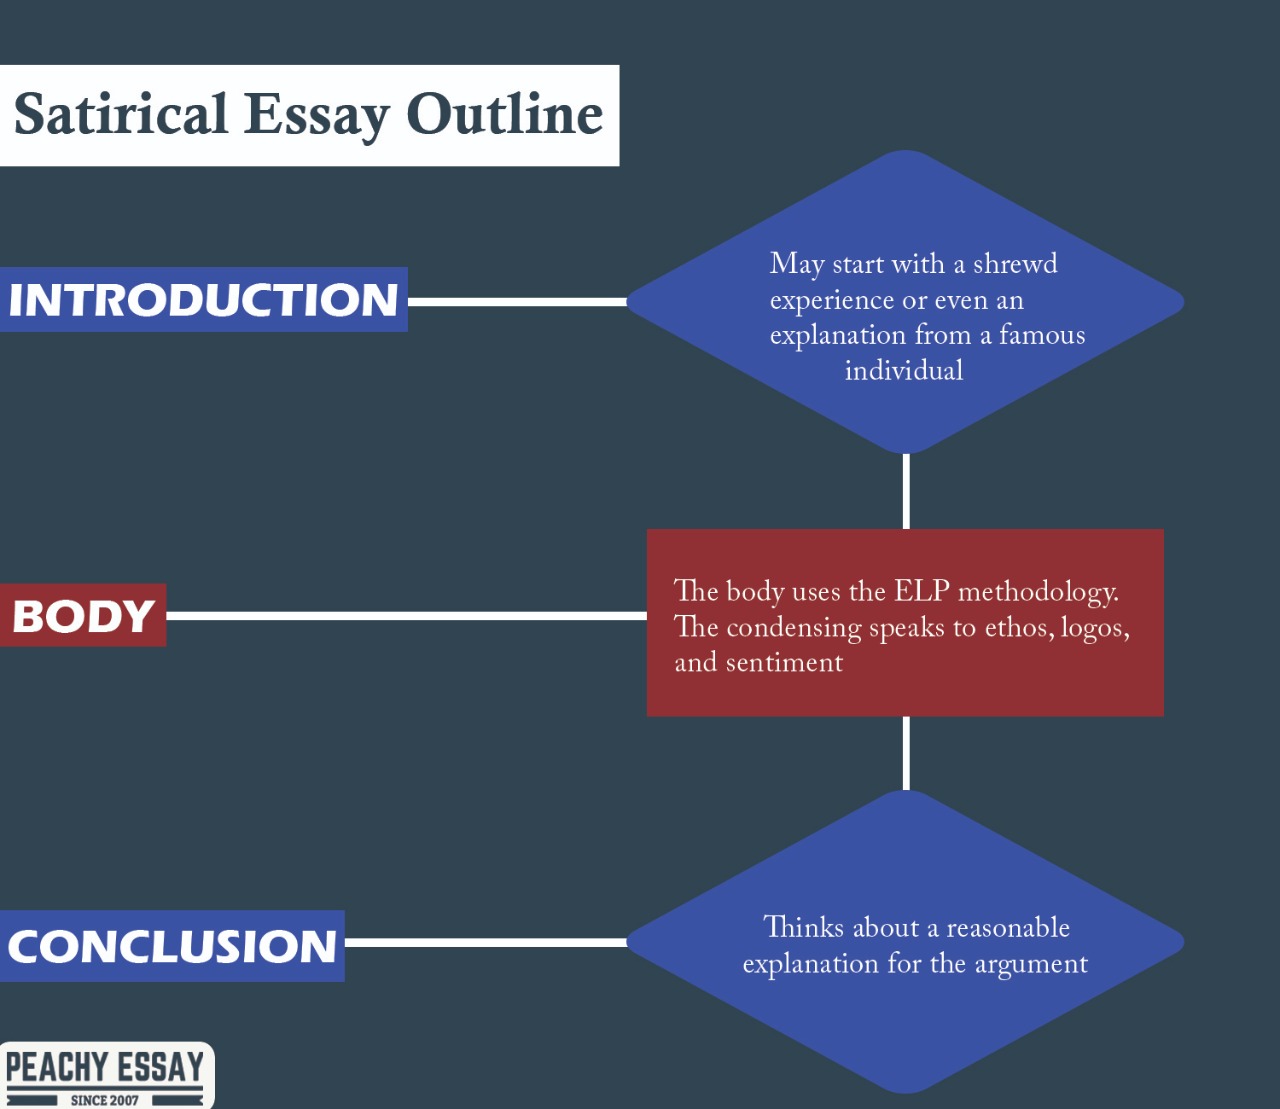 ideas for satirical essays